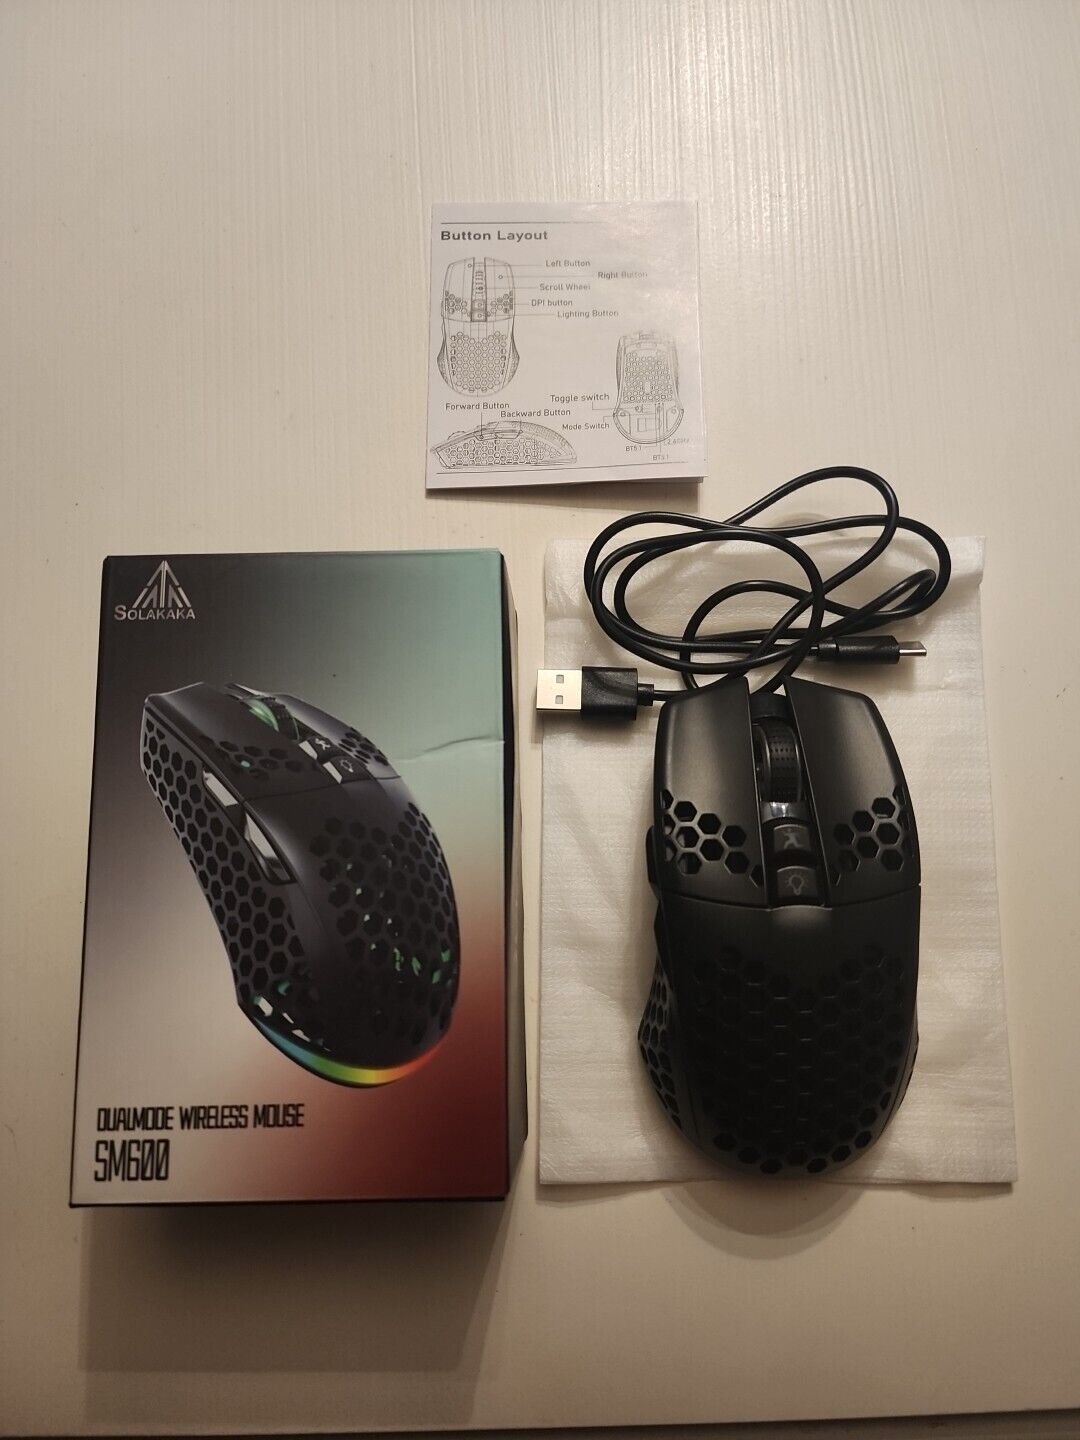 NEW Solakaka SM600 Black Dual Mode Wireless Bluetooth Gaming Mouse Open Box